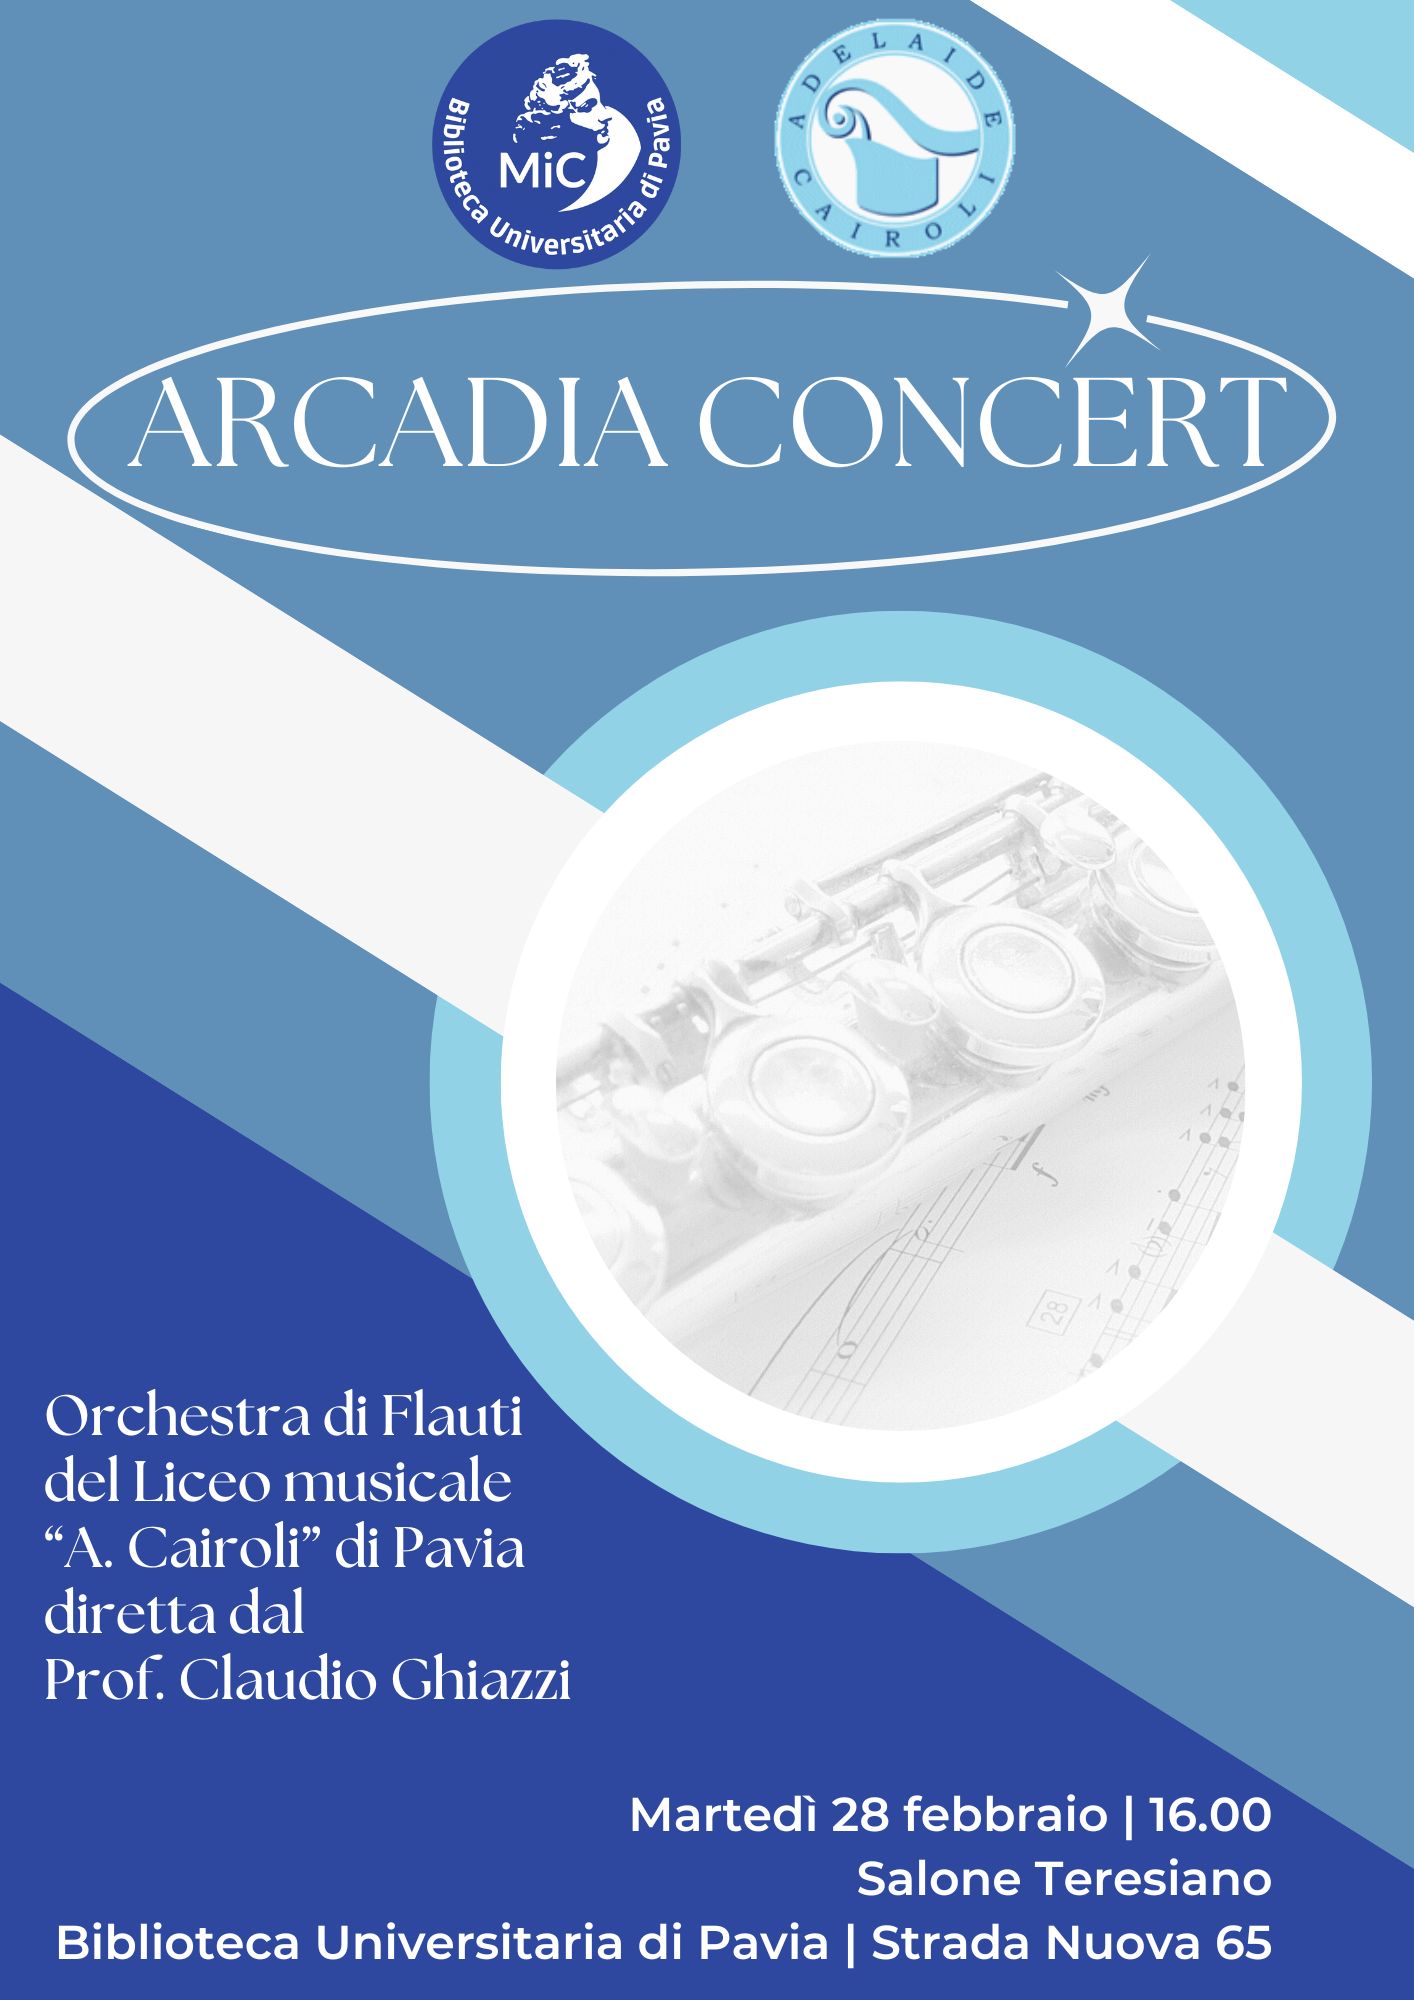 Arcadia Concert - Locandina